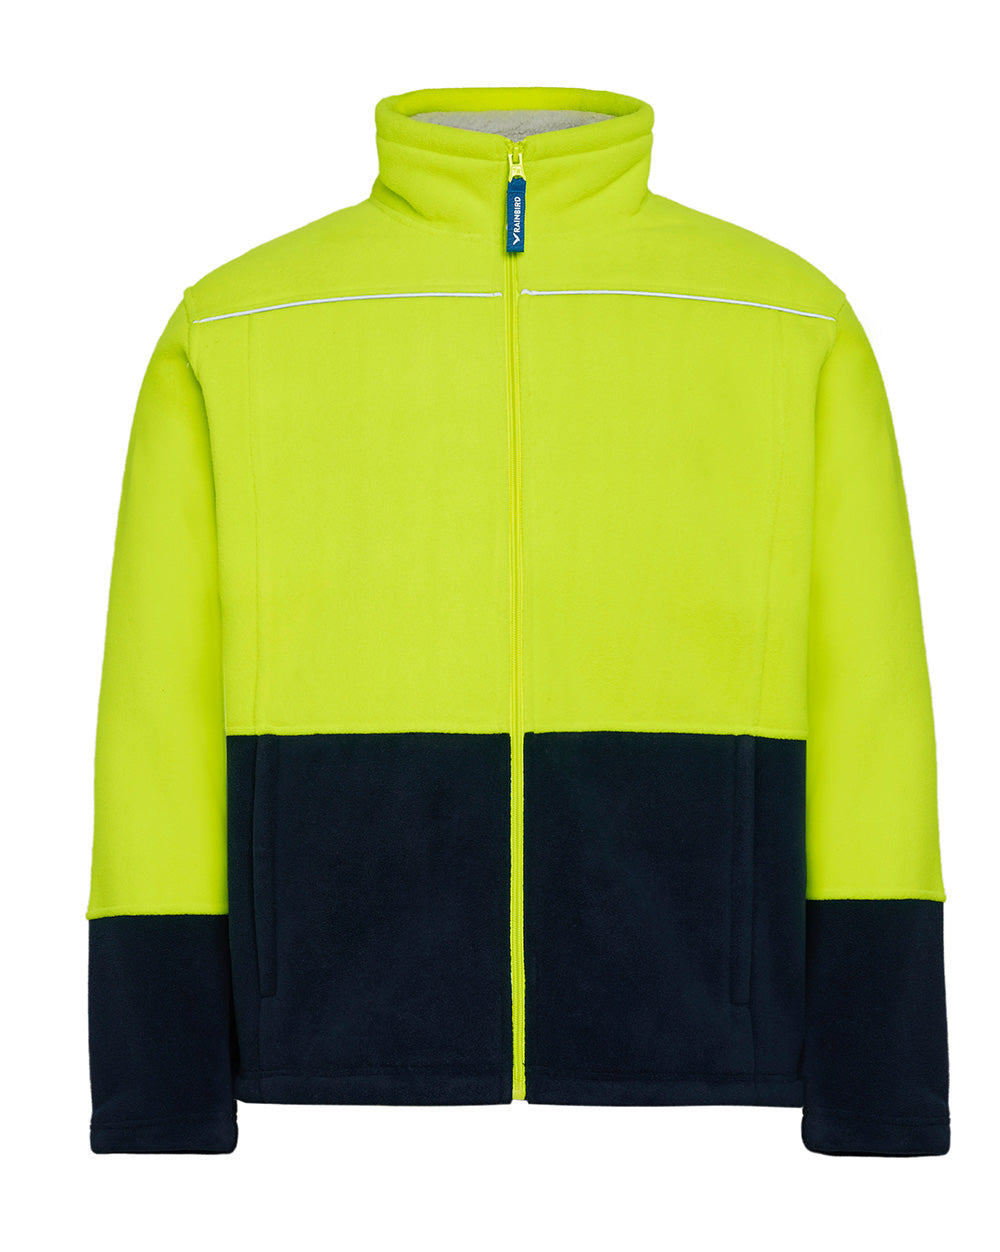 Lumber Jacket in Fluoro Yellow & Navy